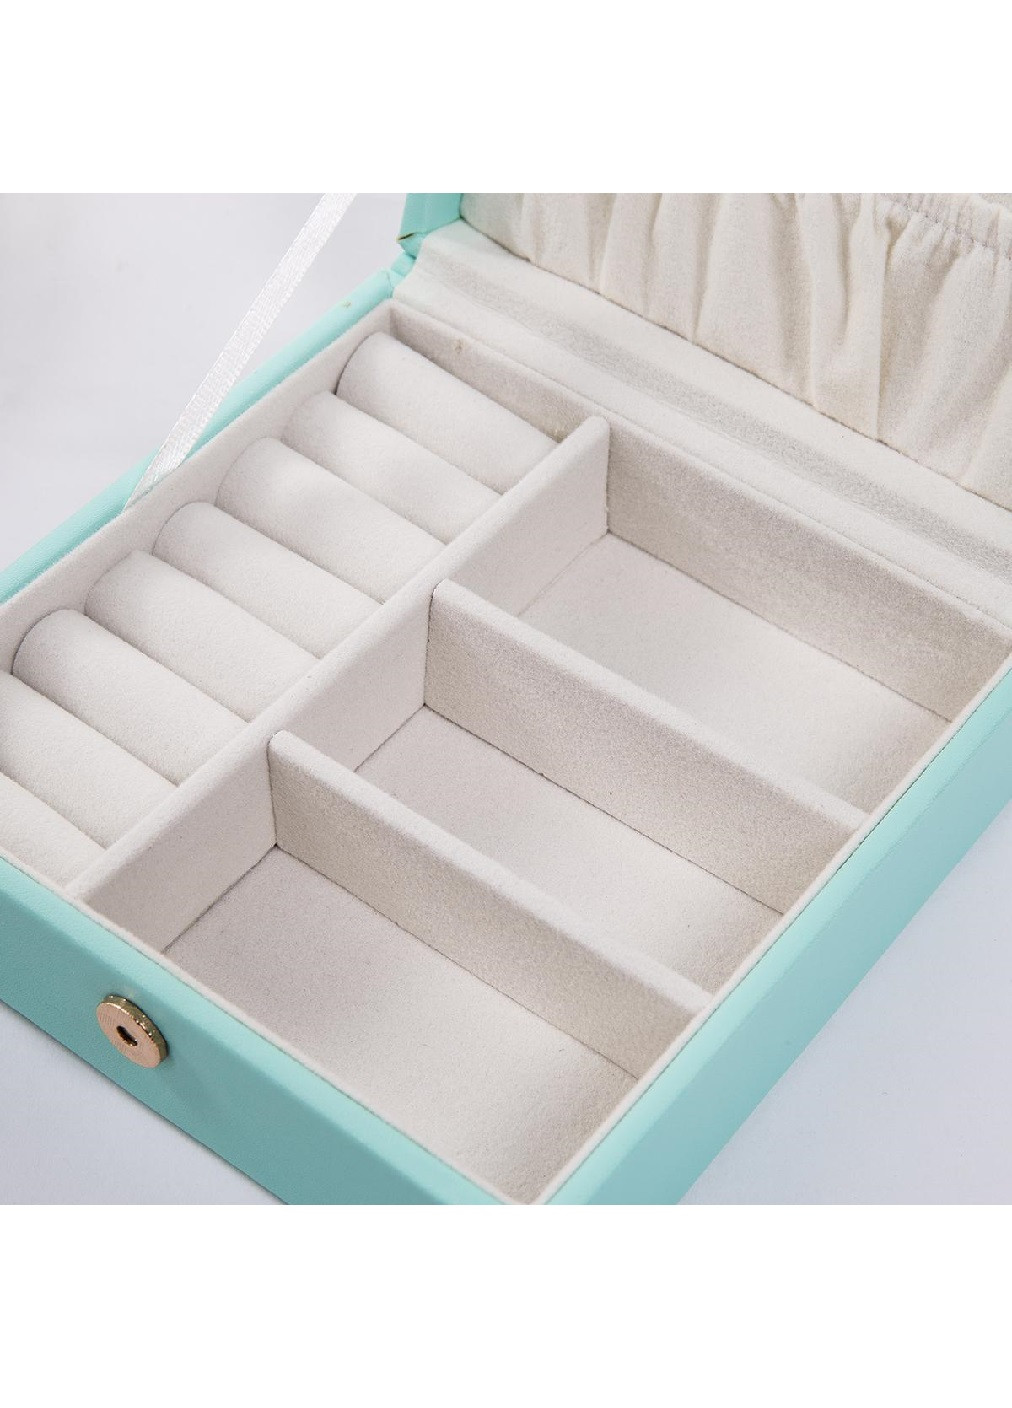 Шкатулка сундук органайзер коробка футляр для хранения украшений бижутерии эко кожа 12х12х5 см (474618-Prob) Голубая Unbranded (259131585)